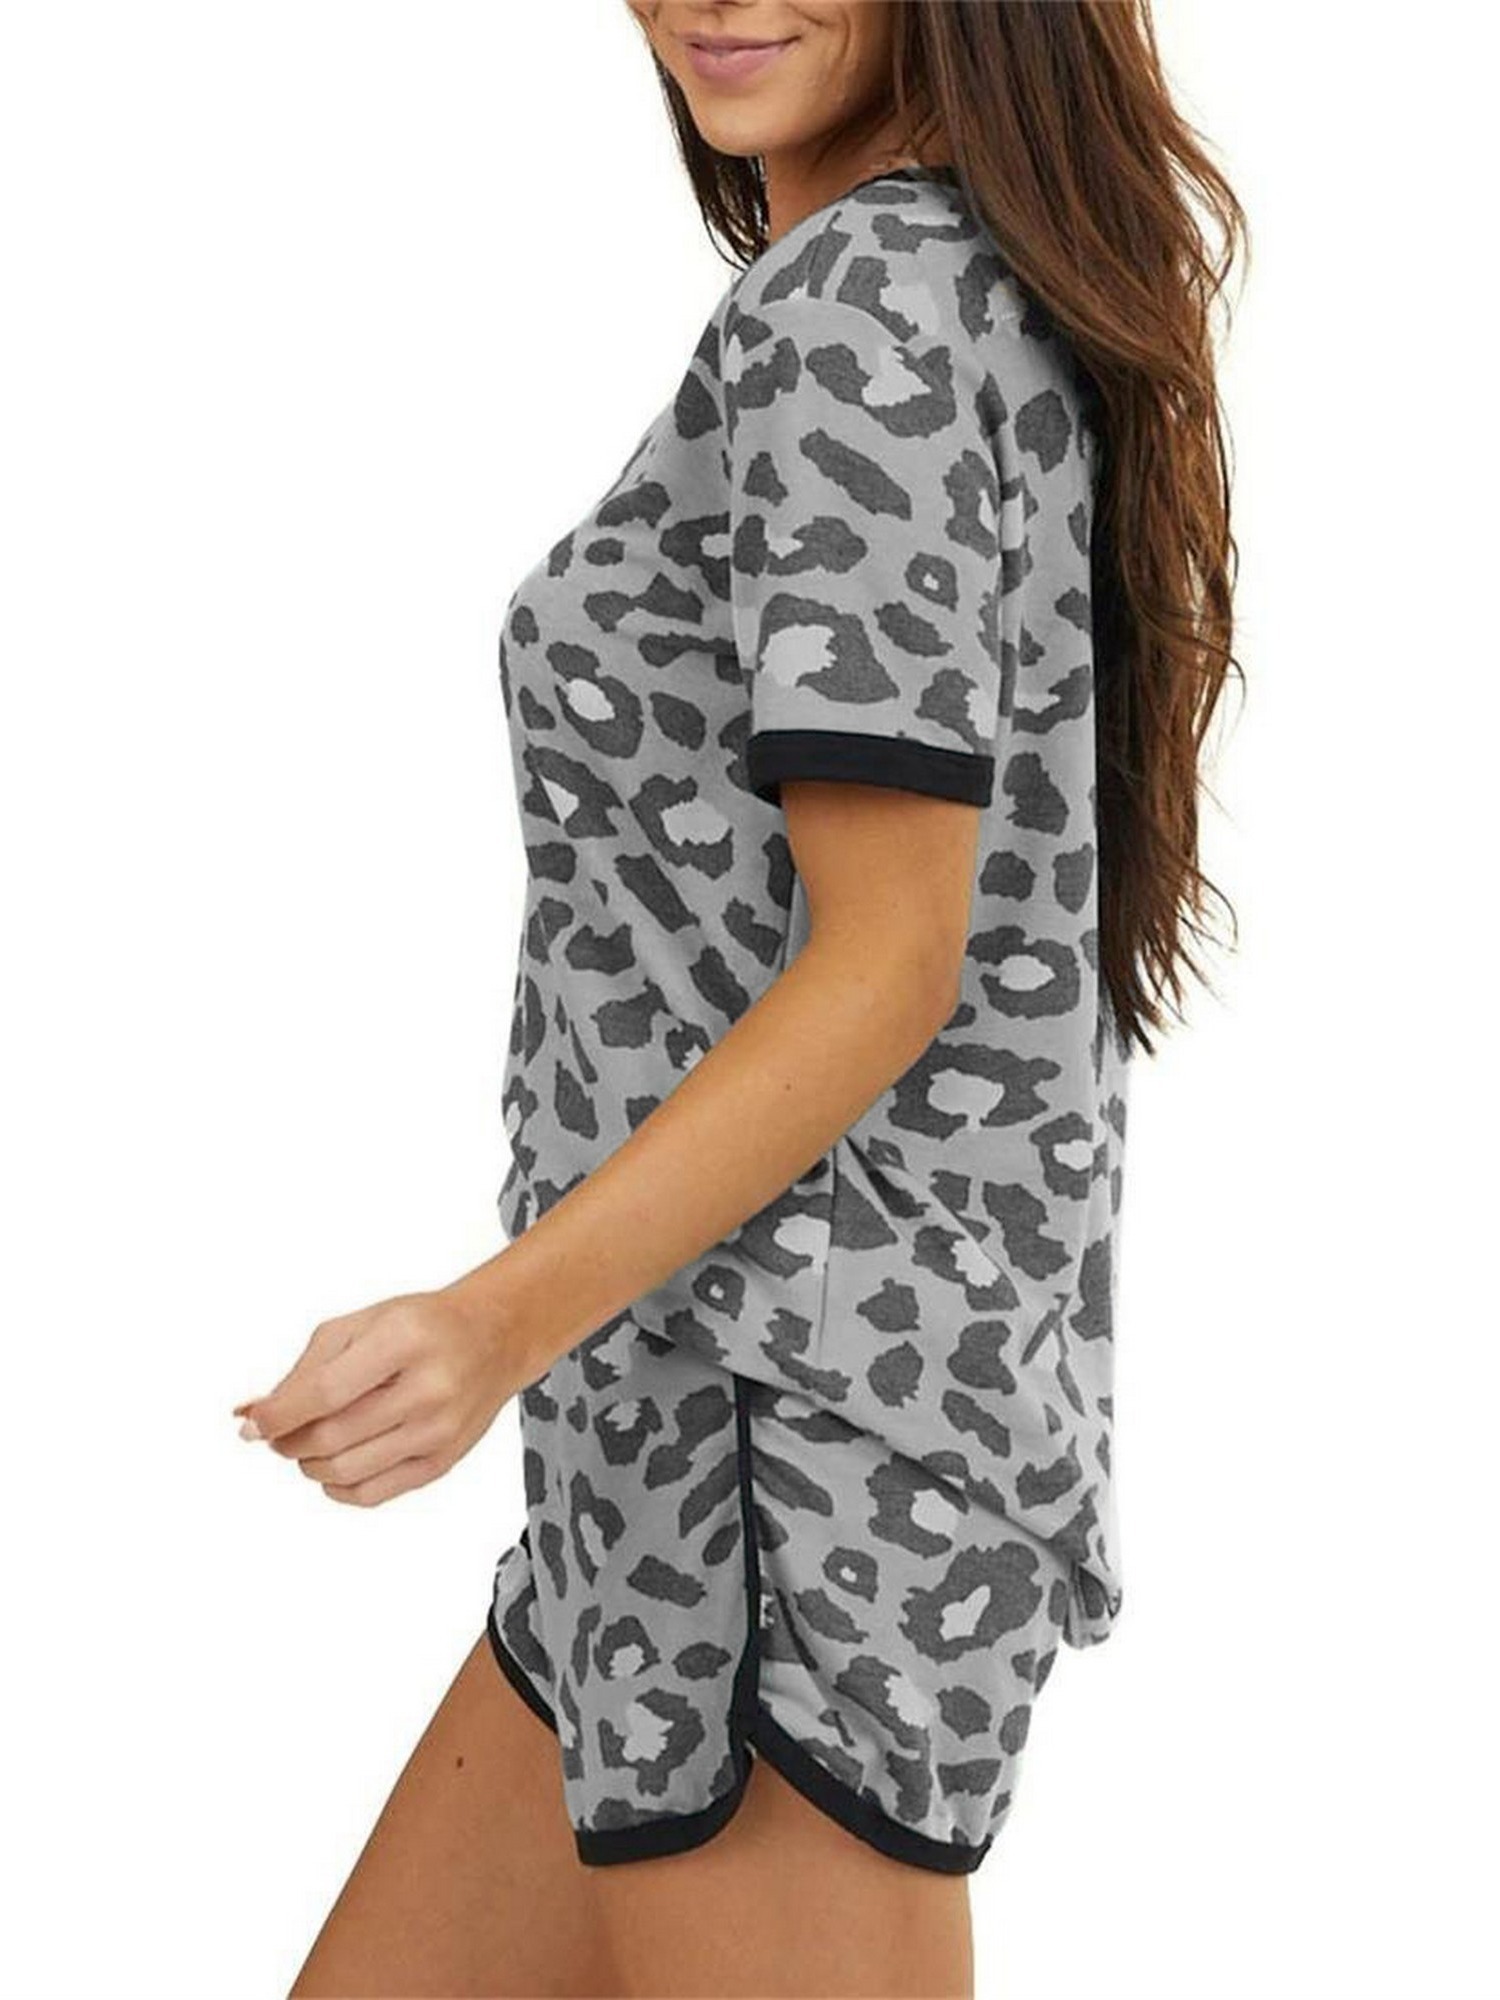 mejores pijamas en pijamalindo.com